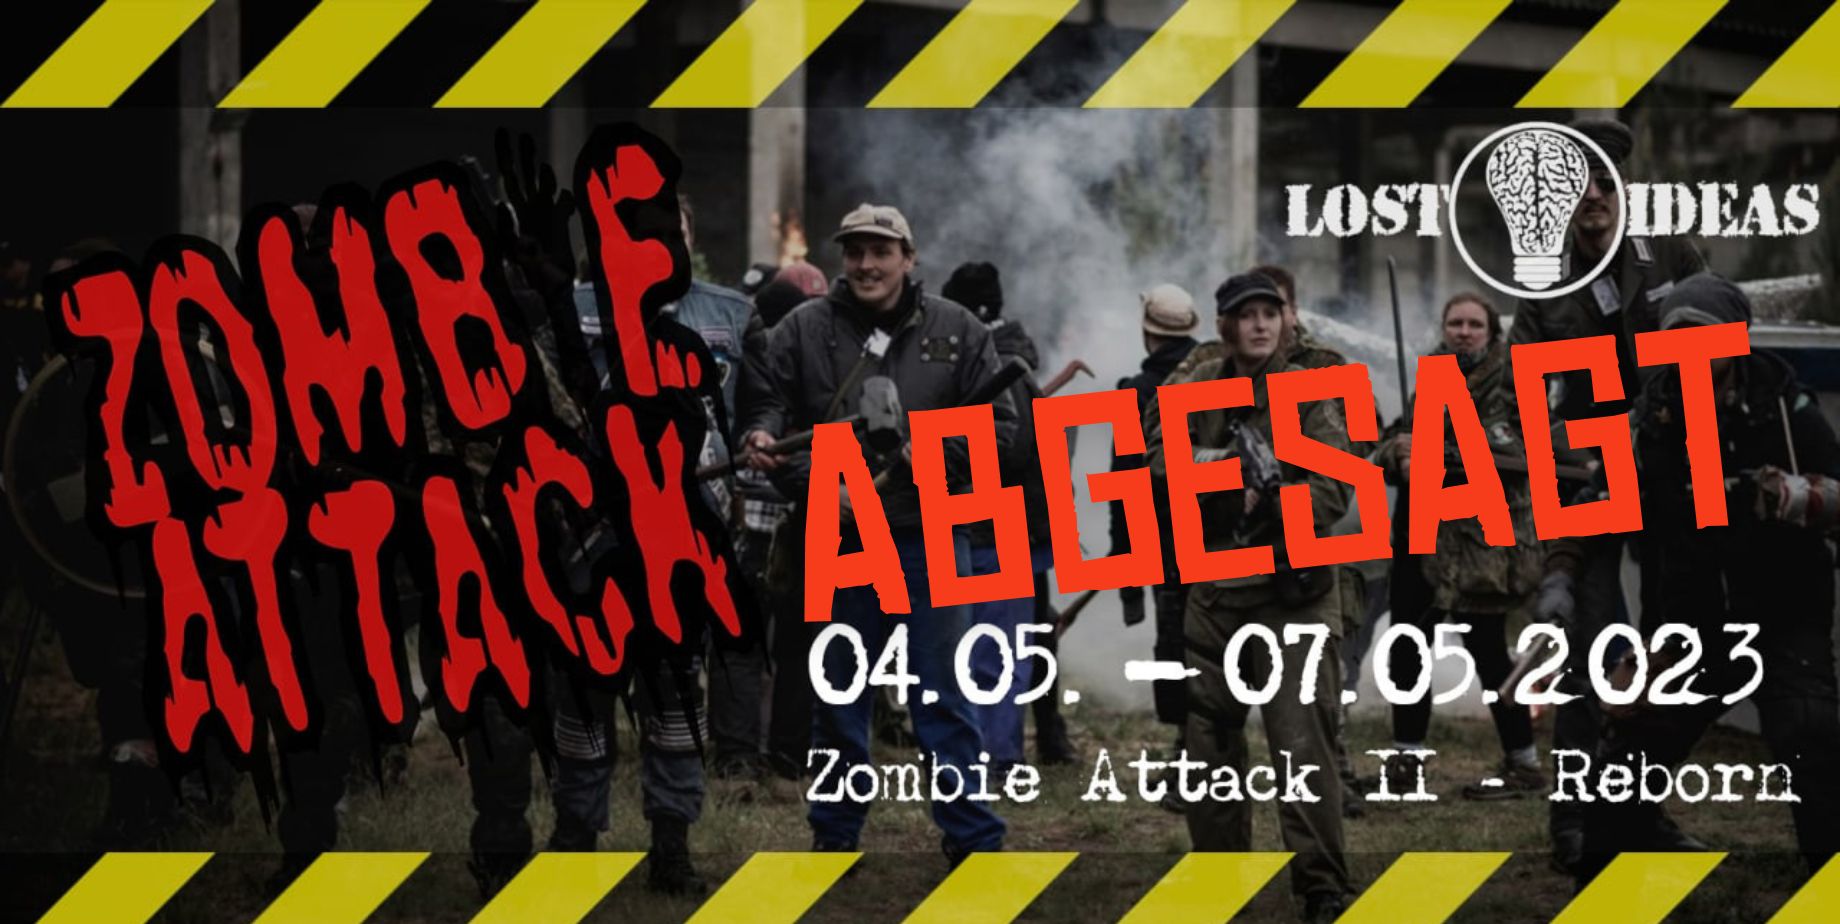 (c) Zombie-attack.de